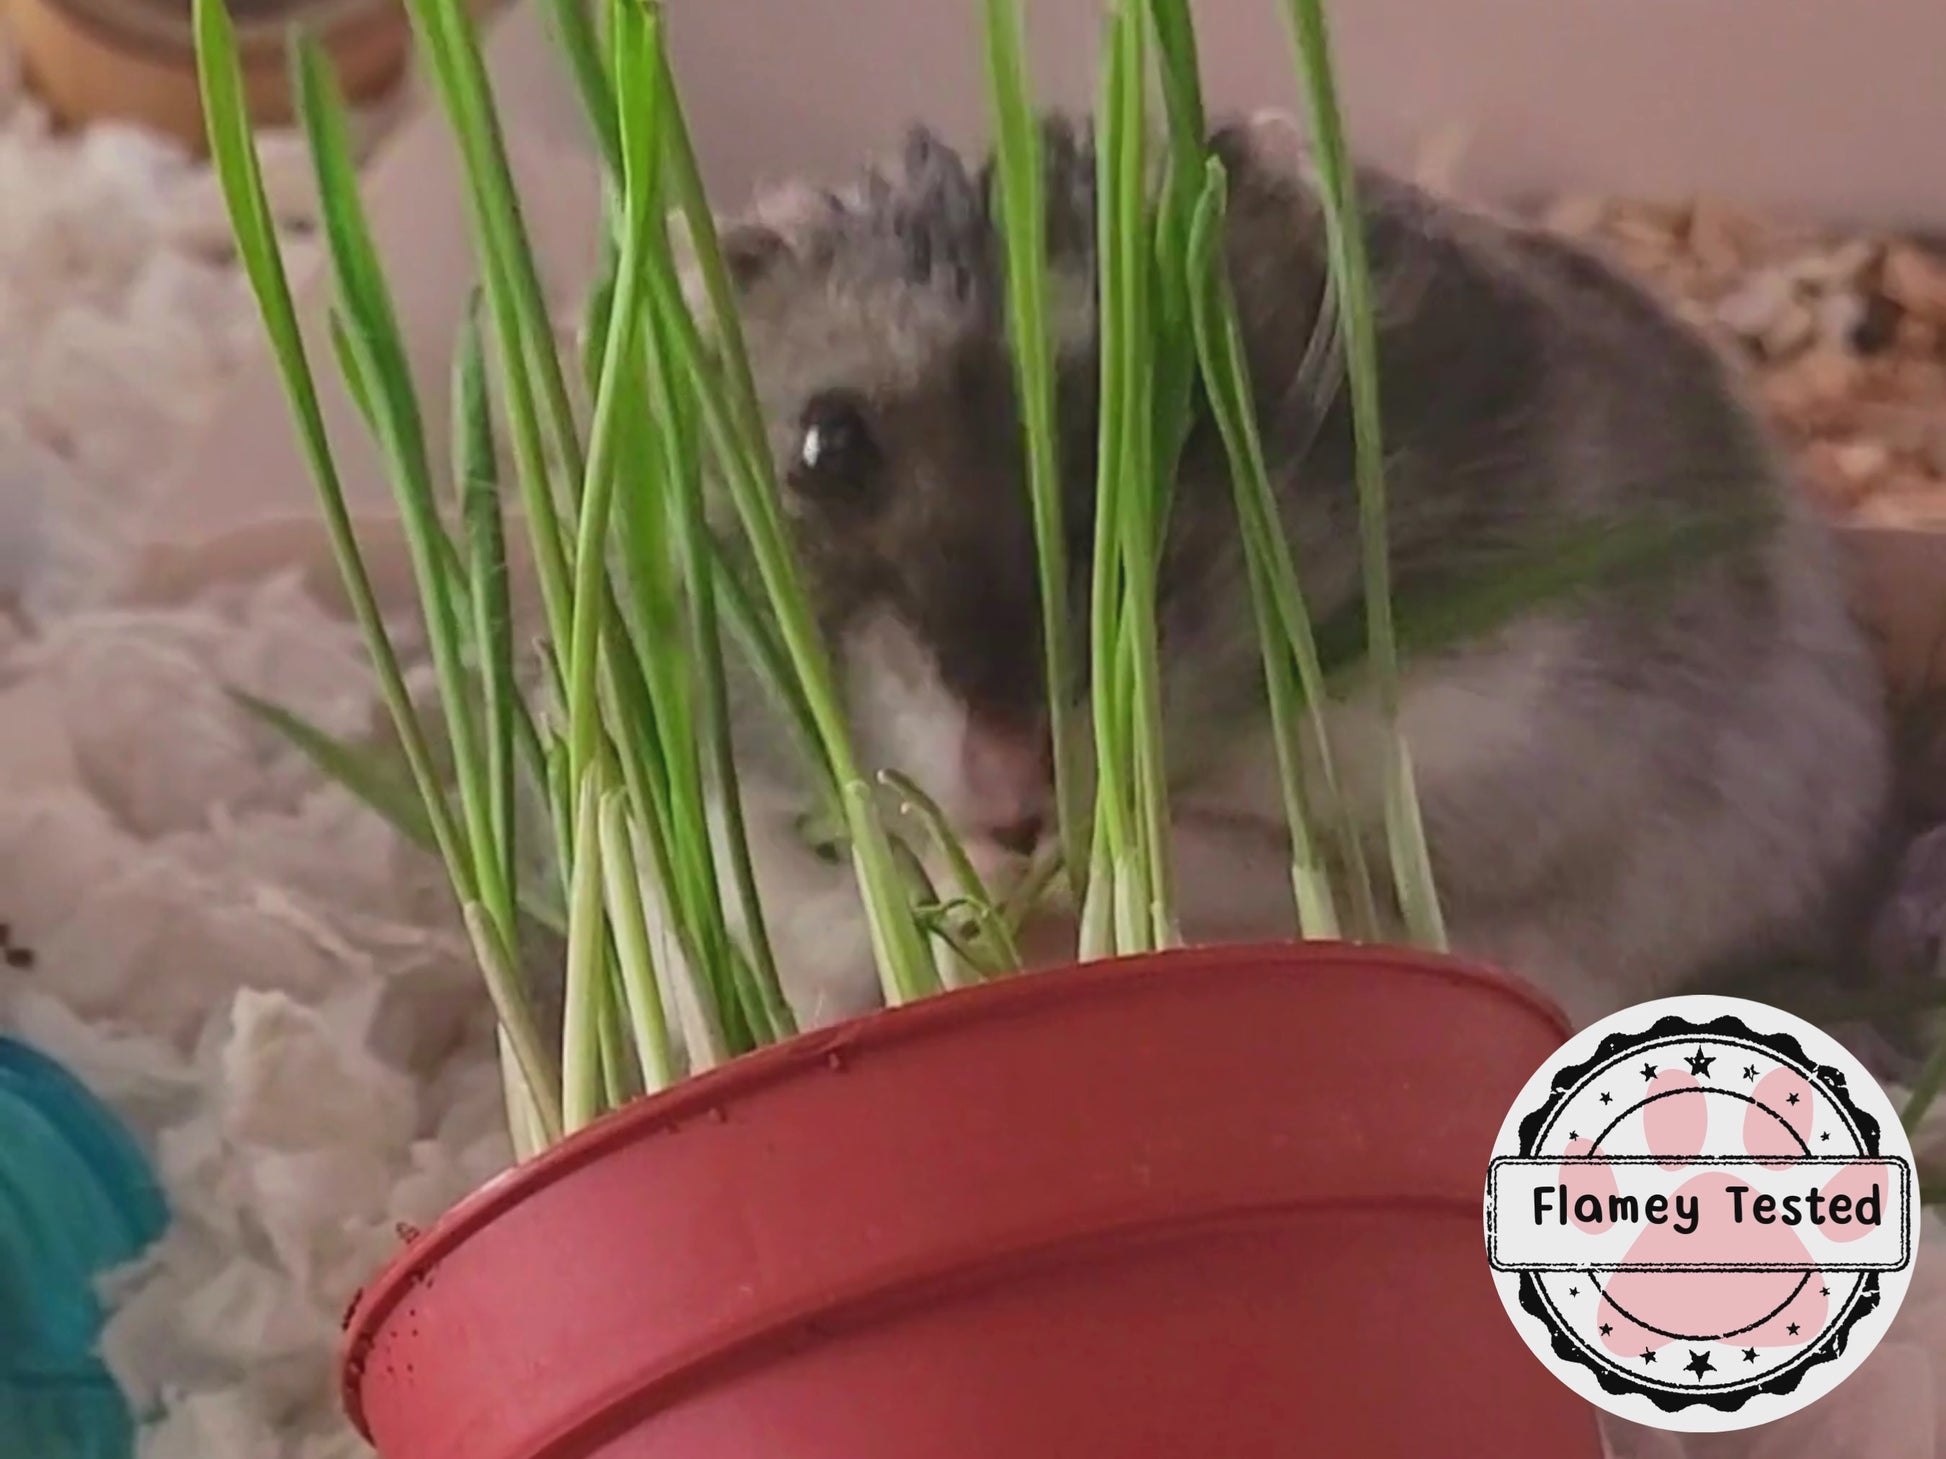 A dwarf hamster has fun eating a wheatgrass microgreen plant in a plastic plant pot